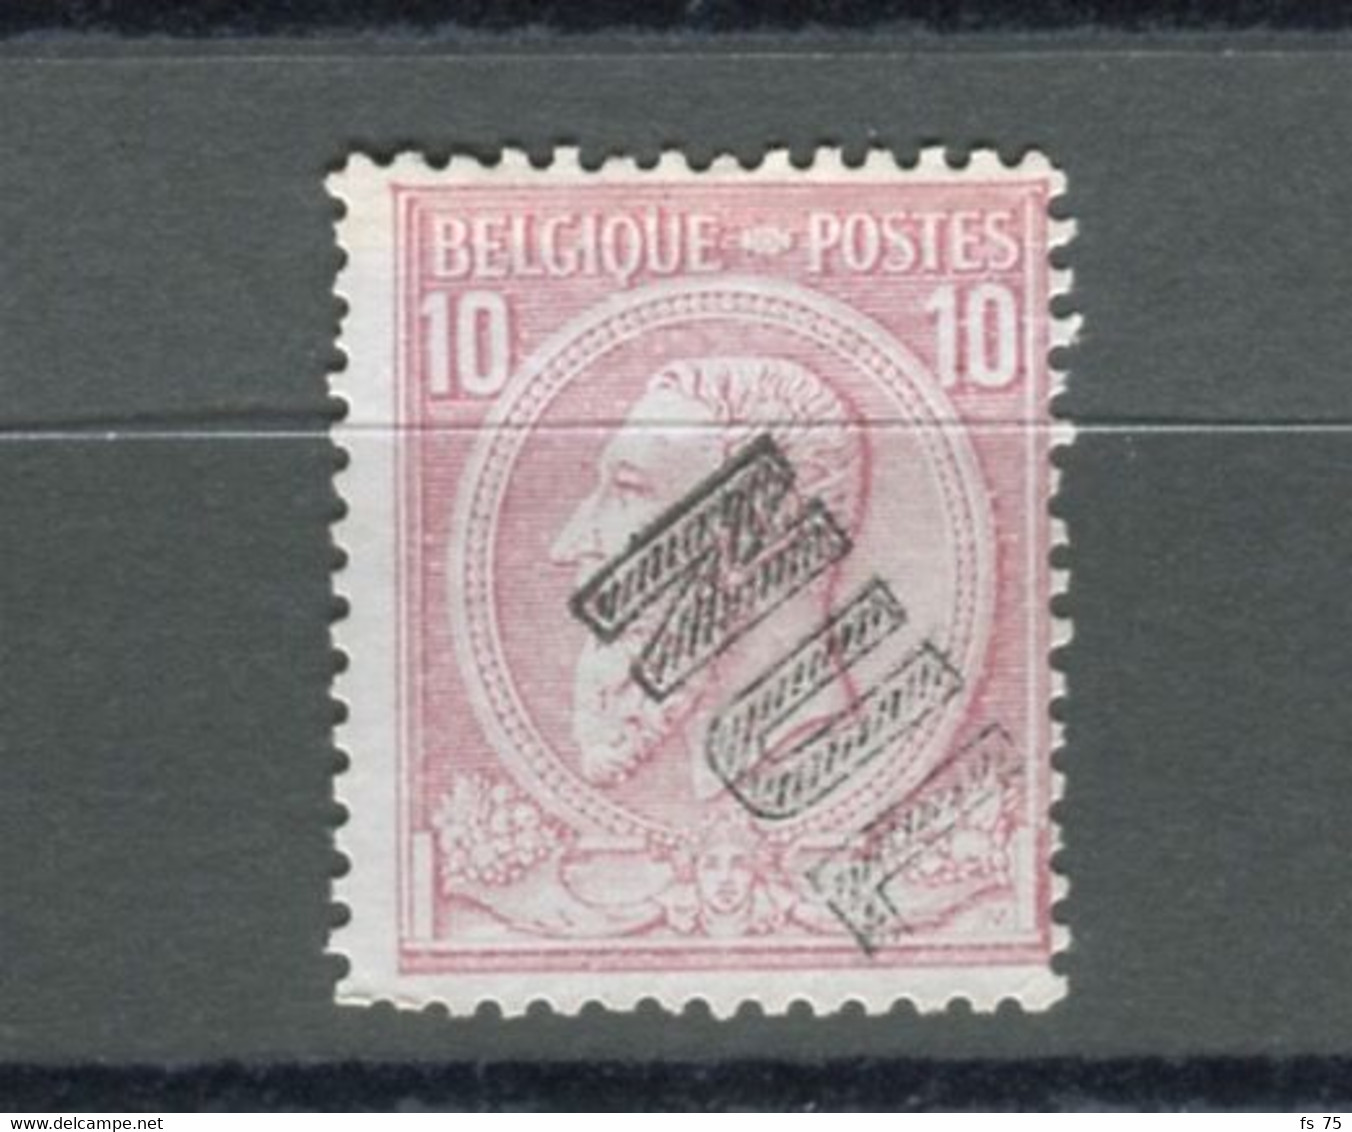 BELGIQUE - COB N°46 10C ROSE OBLITERE GRIFFE NUL - 1884-1891 Leopold II.